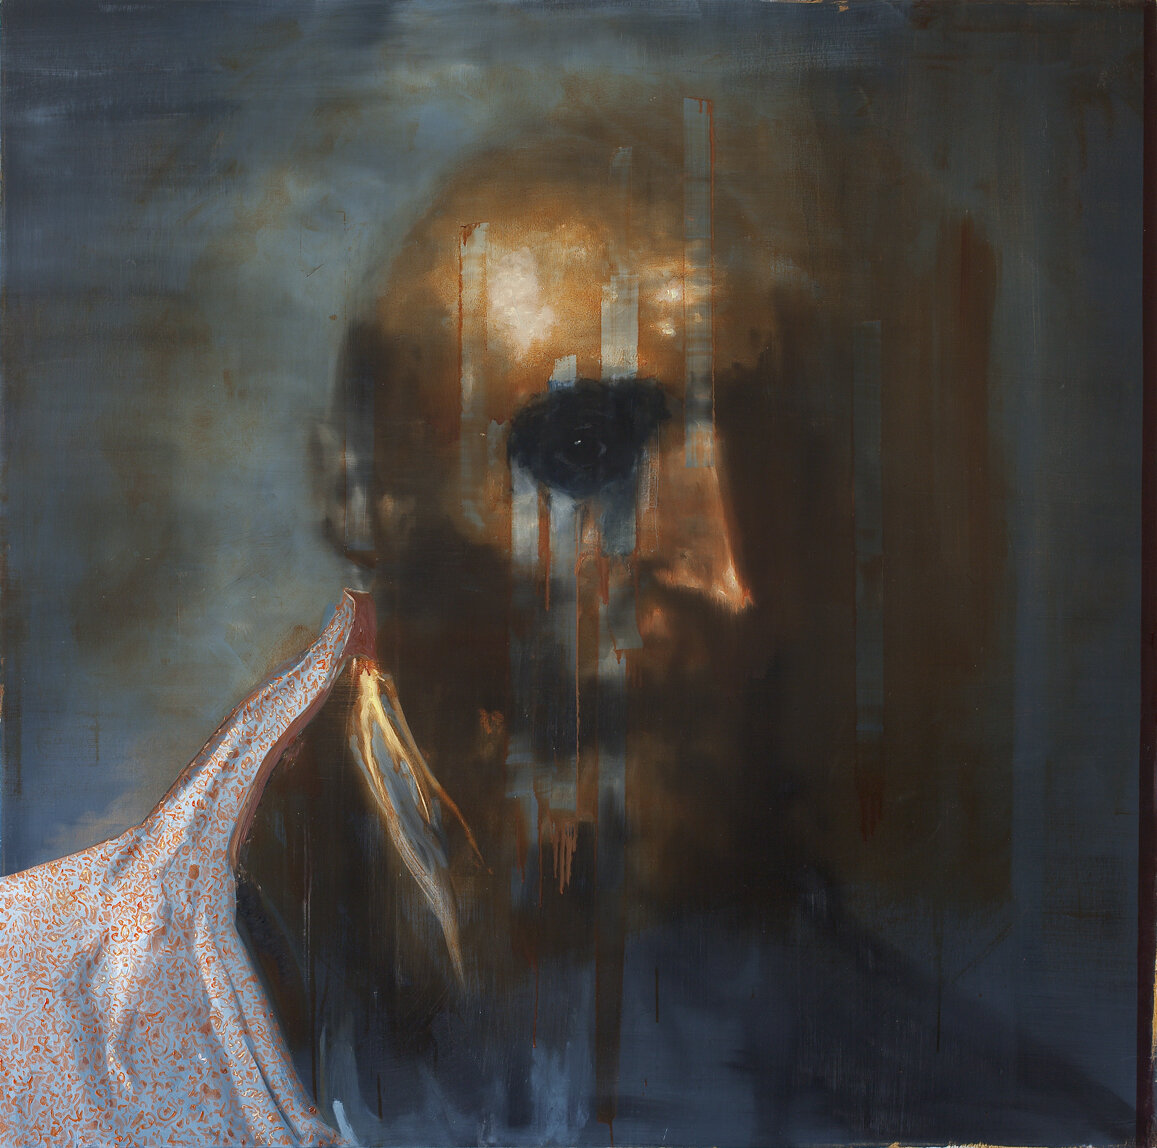 Listener (2011), oil on canvas, 150x150 cm